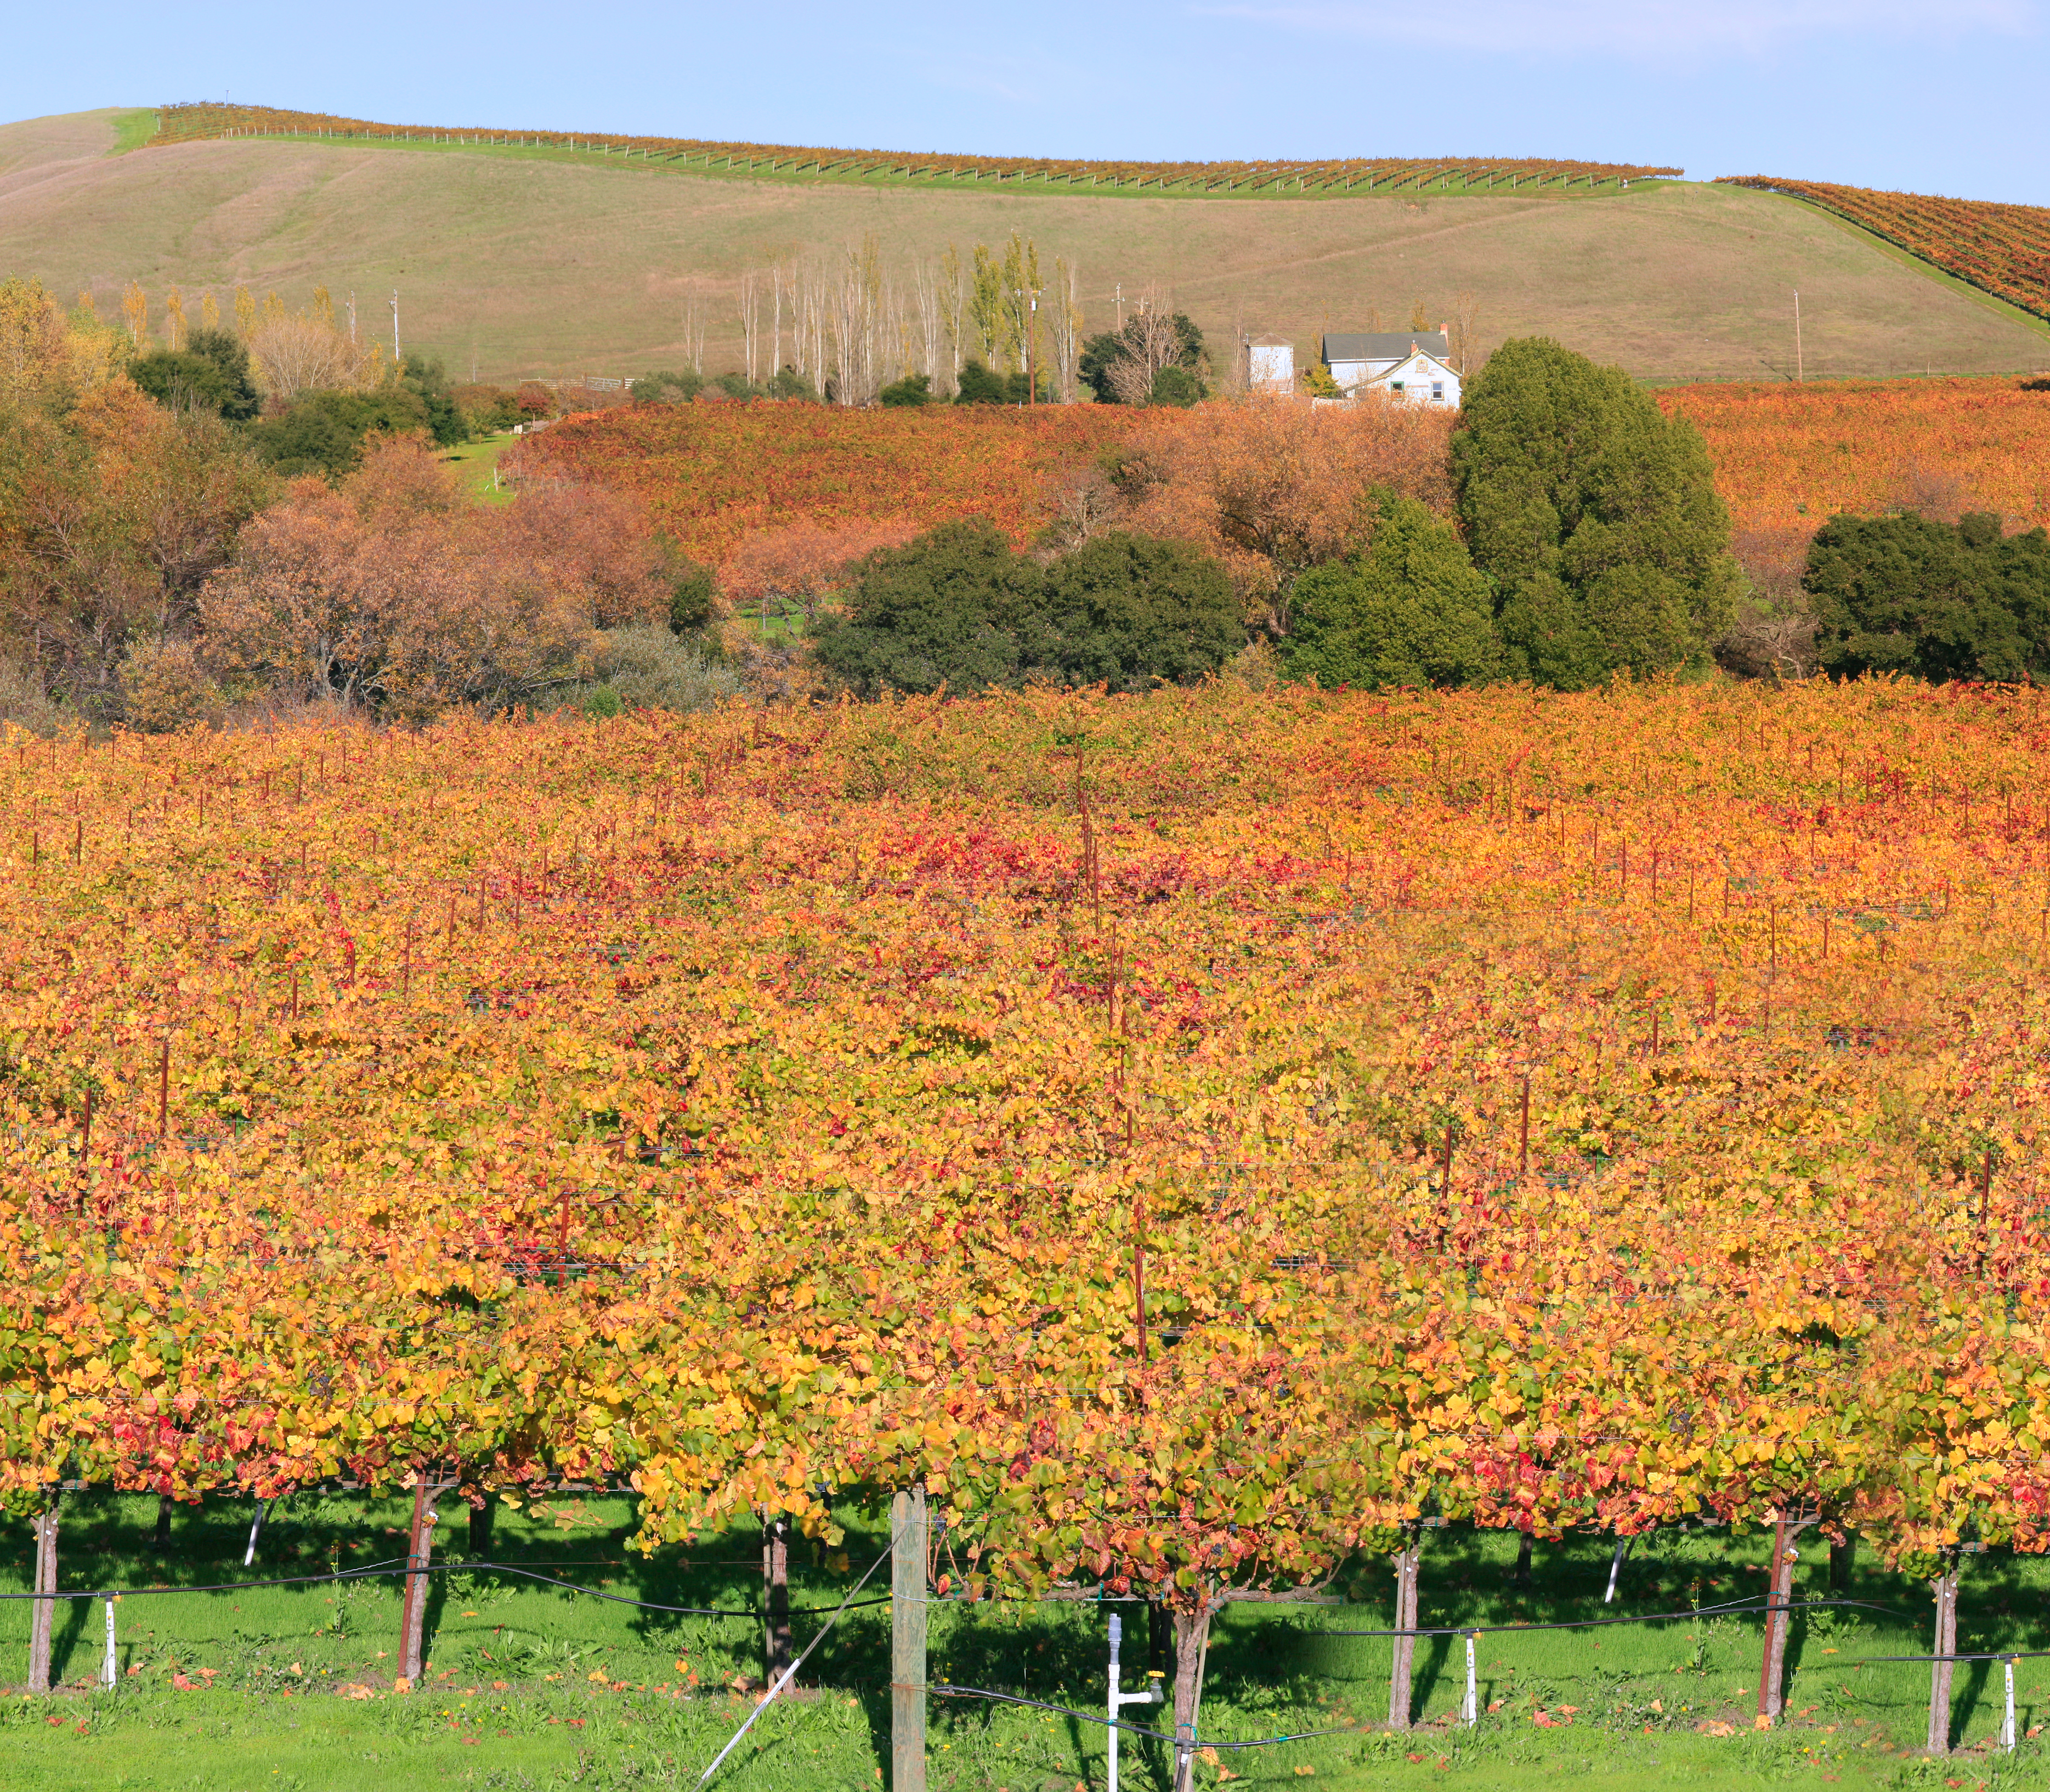 File:Napa valley vineyard and winery.jpg - Wikimedia Commons